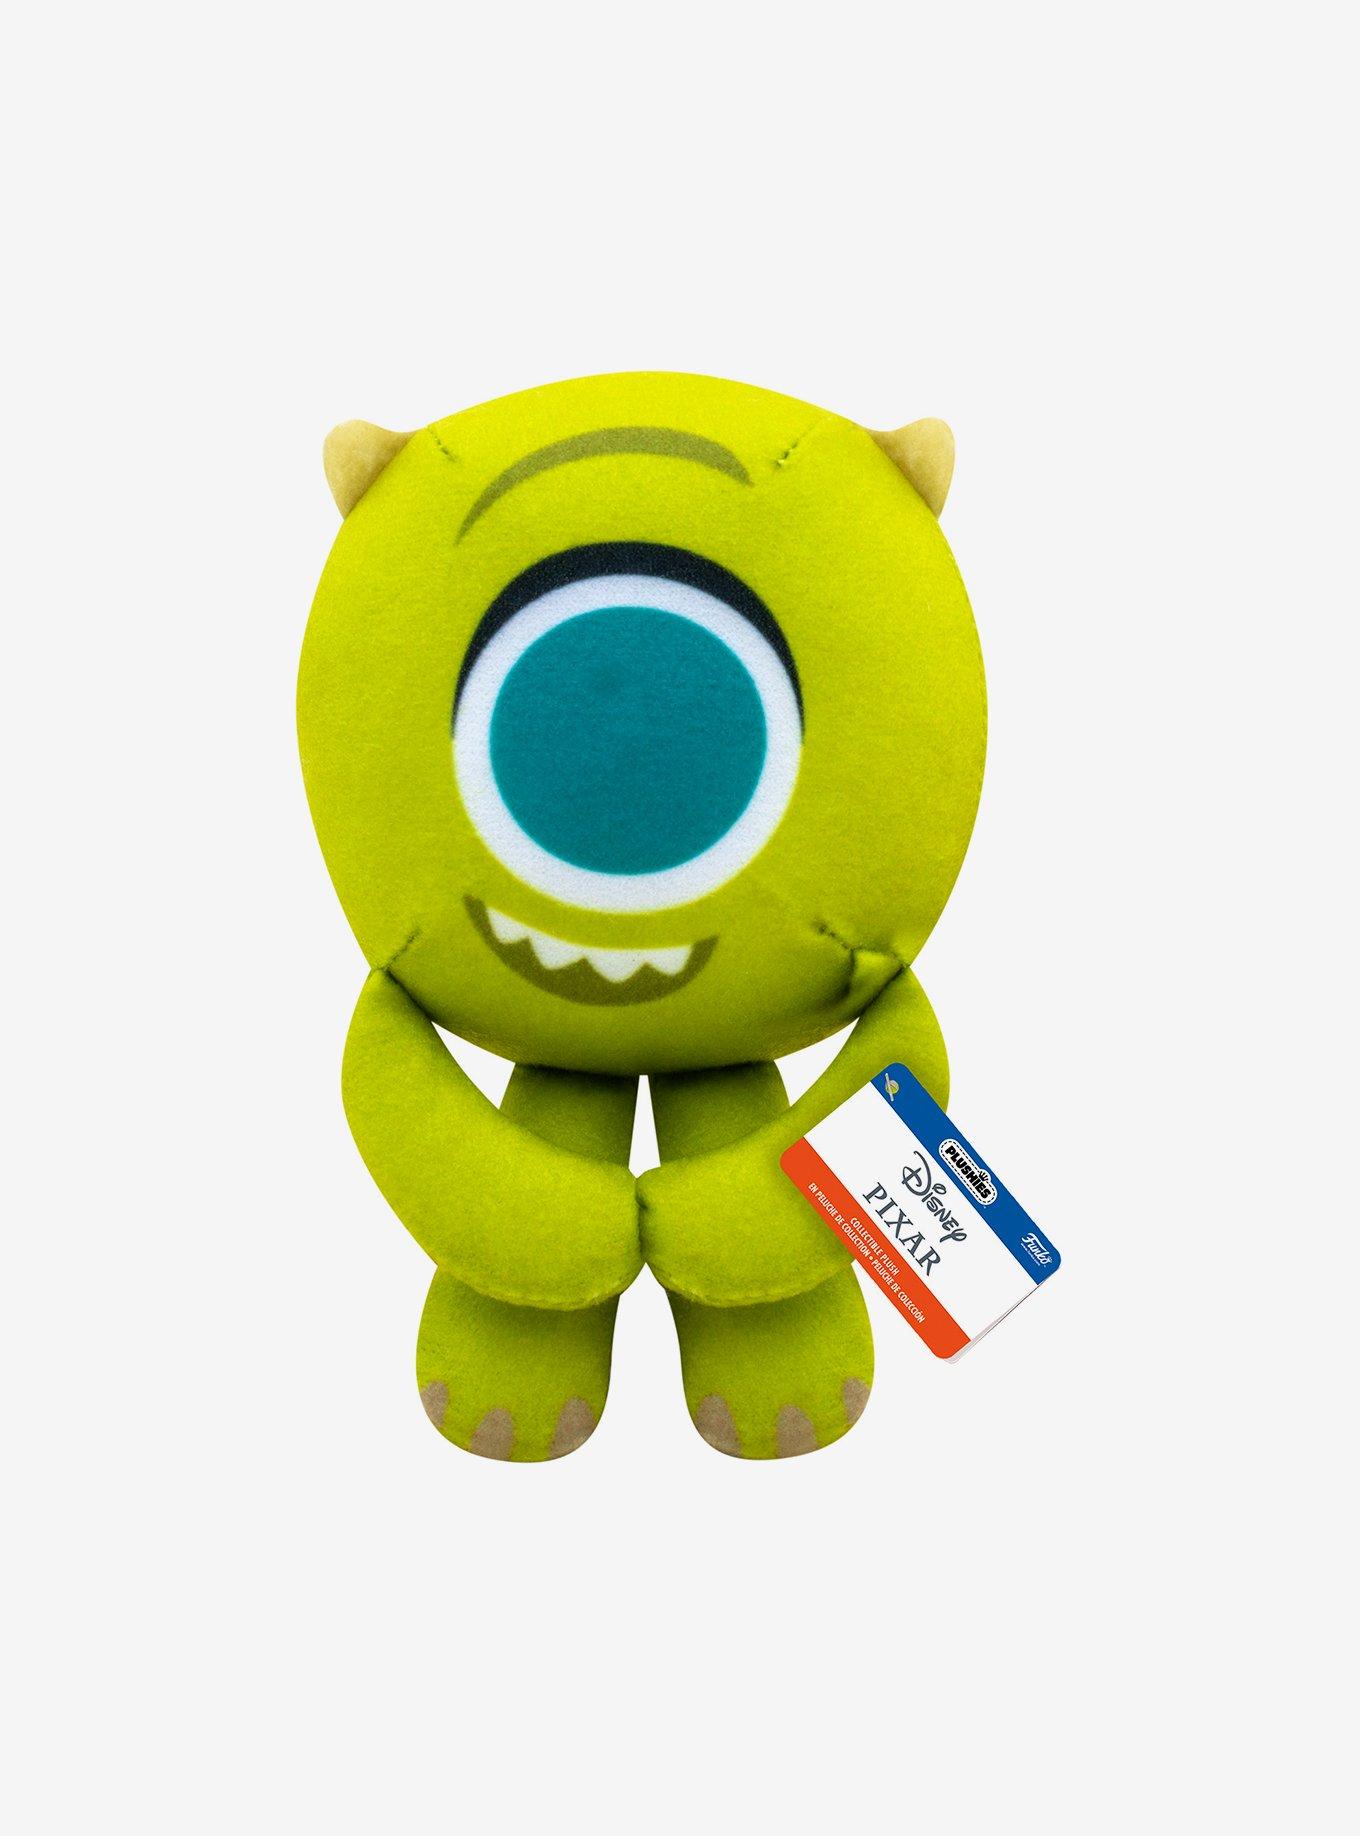  Jess-Sha Store 3 PCs Stickers Shrek Wazowski, Shrek